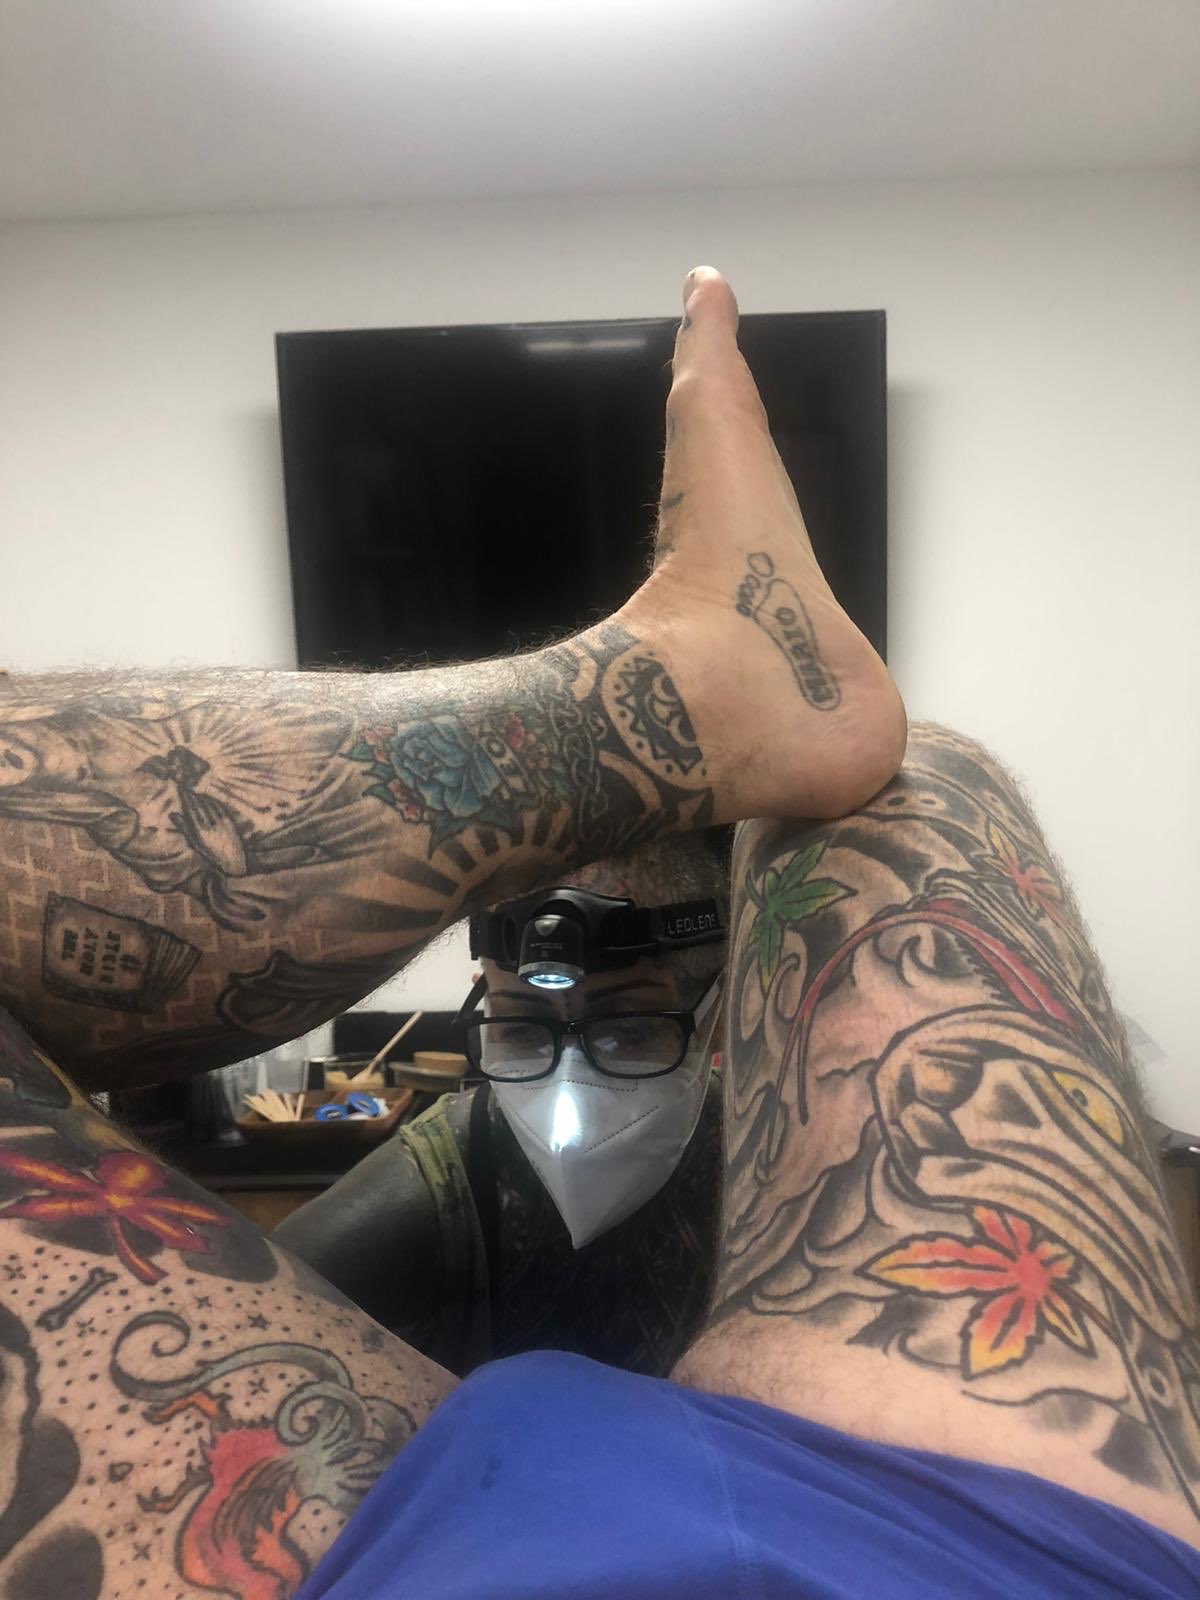 Deity Tattoo on Twitter: "Important gap filling took place yesterday #gaps #geometric #dotwork #deitytattoo #london #tattoos #brighton #tattooartist all enquires via: https://t.co/zoQpd4W1yE https://t.co/0Z0sAF0UkQ" / X